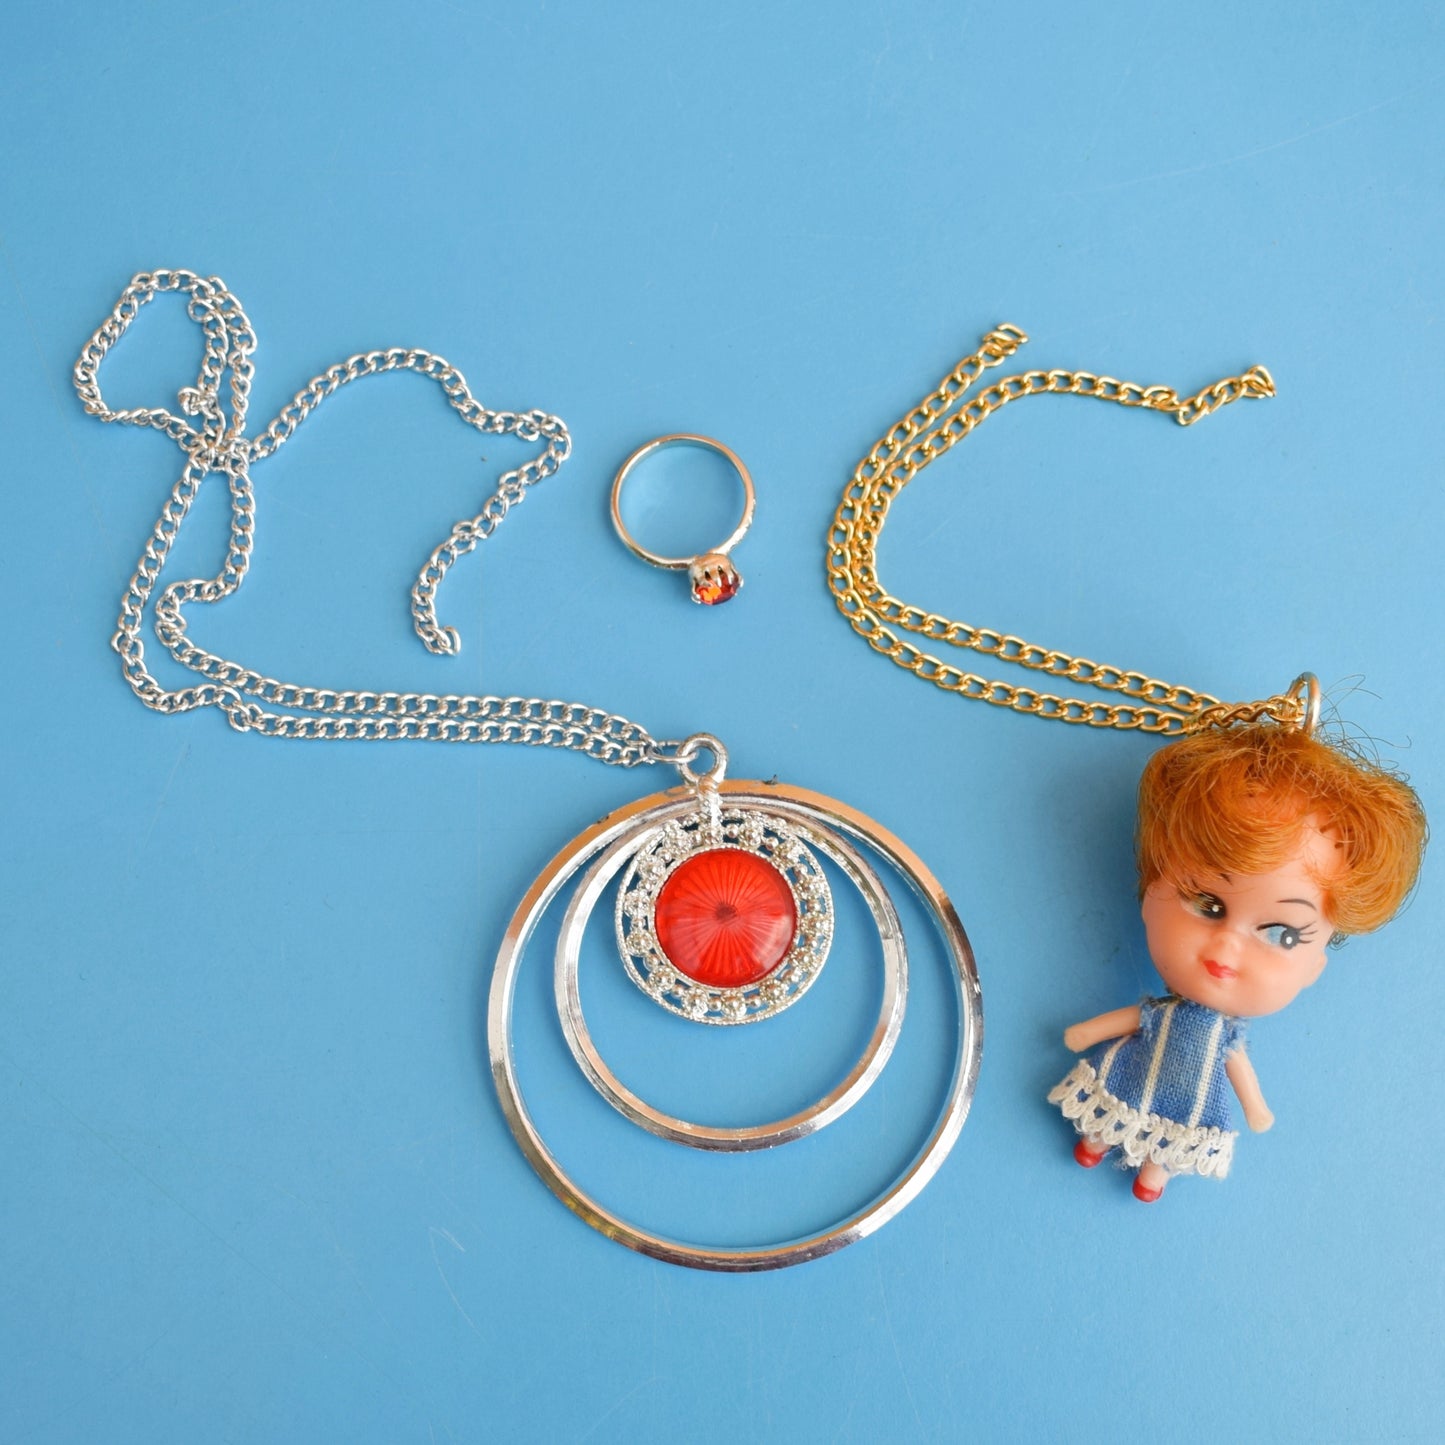 Vintage 1970s Fun Plastic Jewellery / Bits - Kids